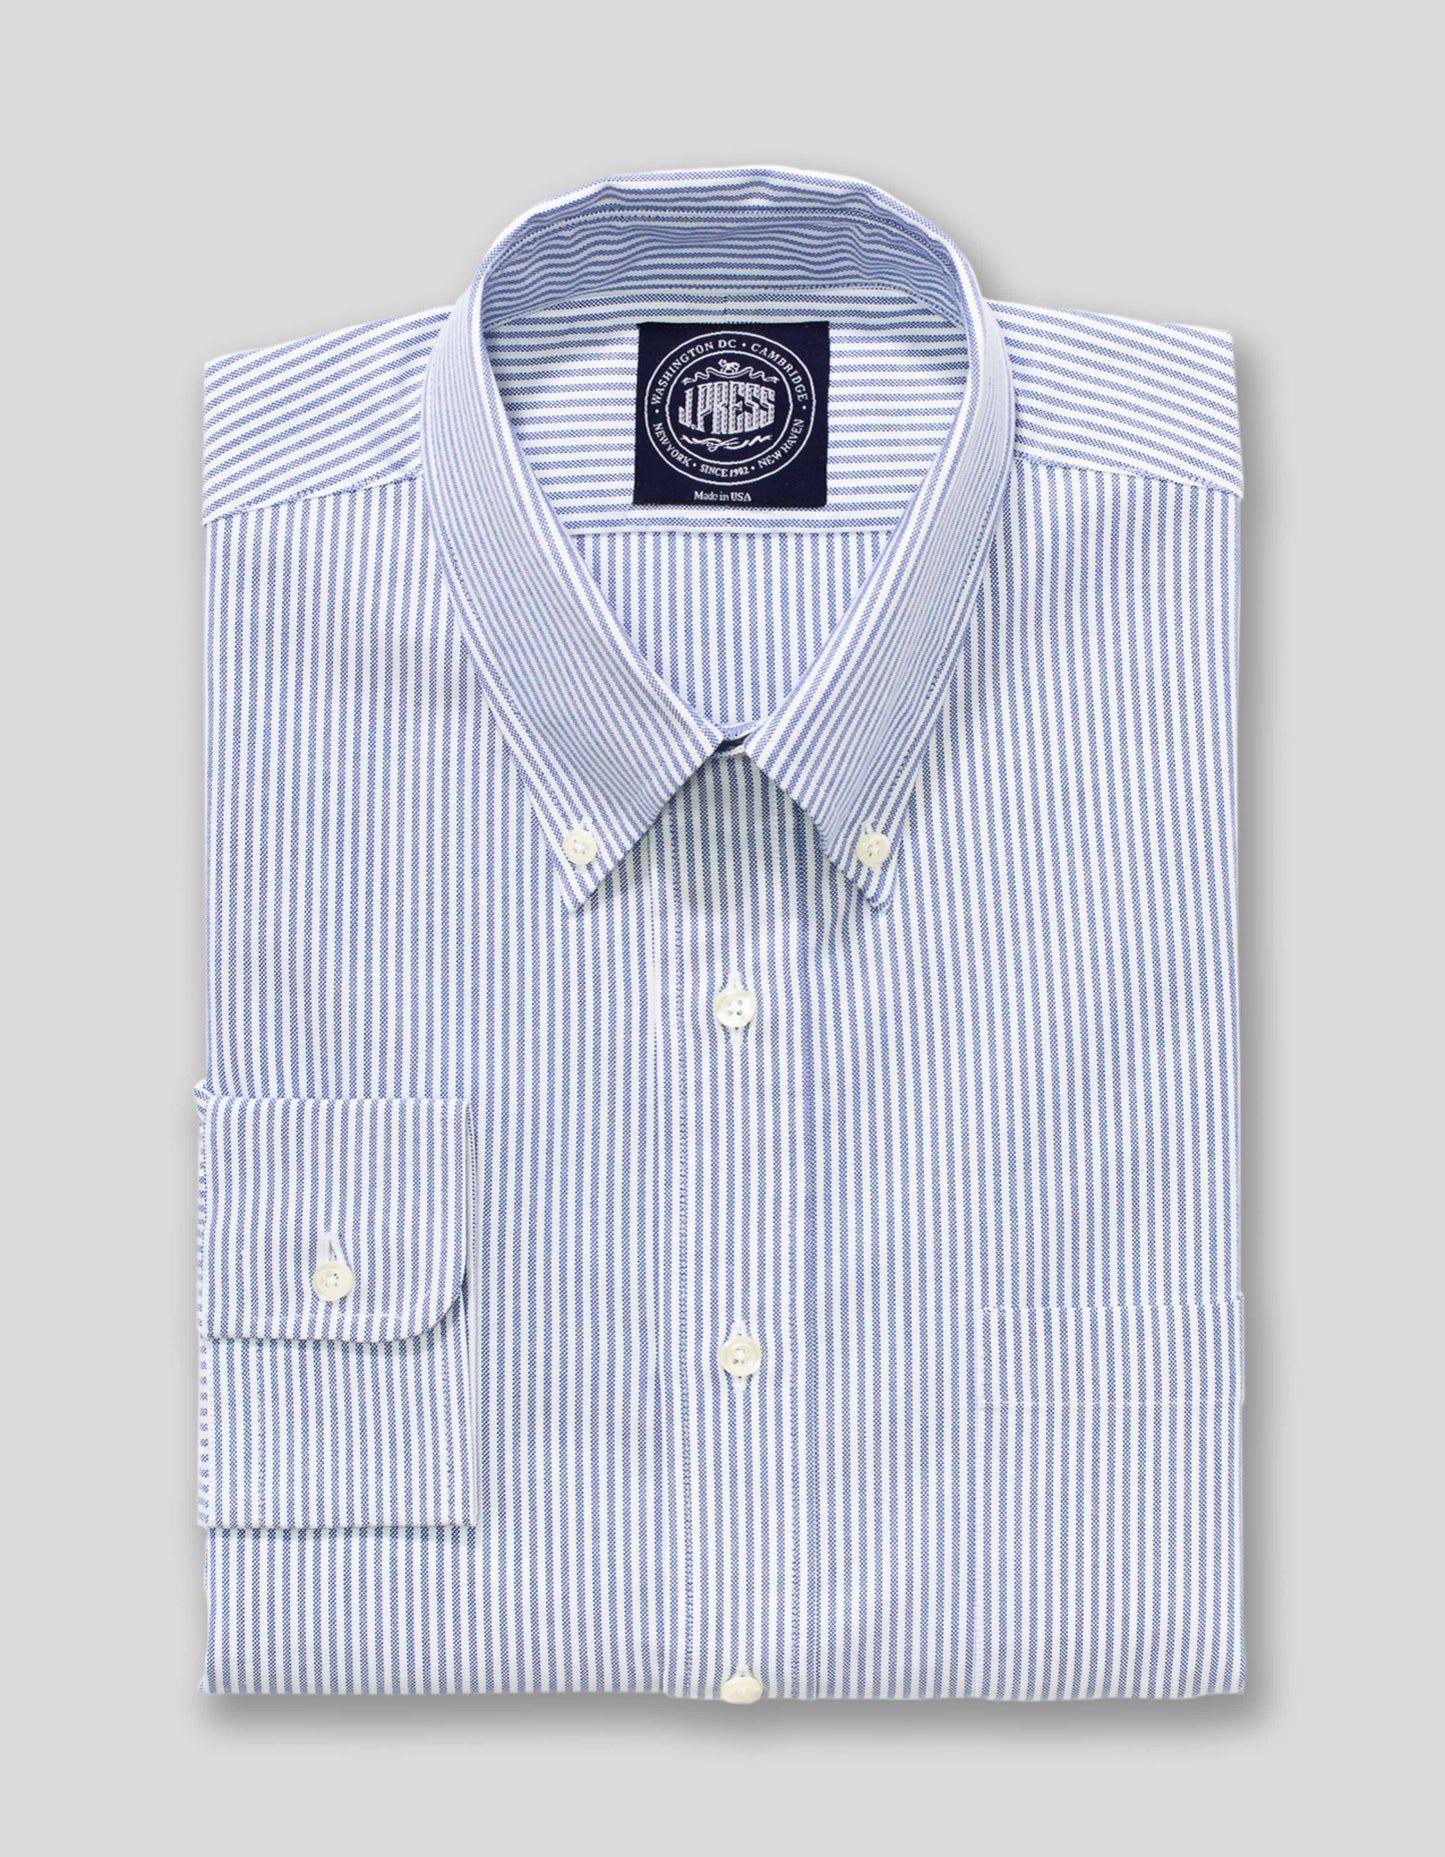 BLUE/WHITE OXFORD DRESS SHIRT - TRIM FIT